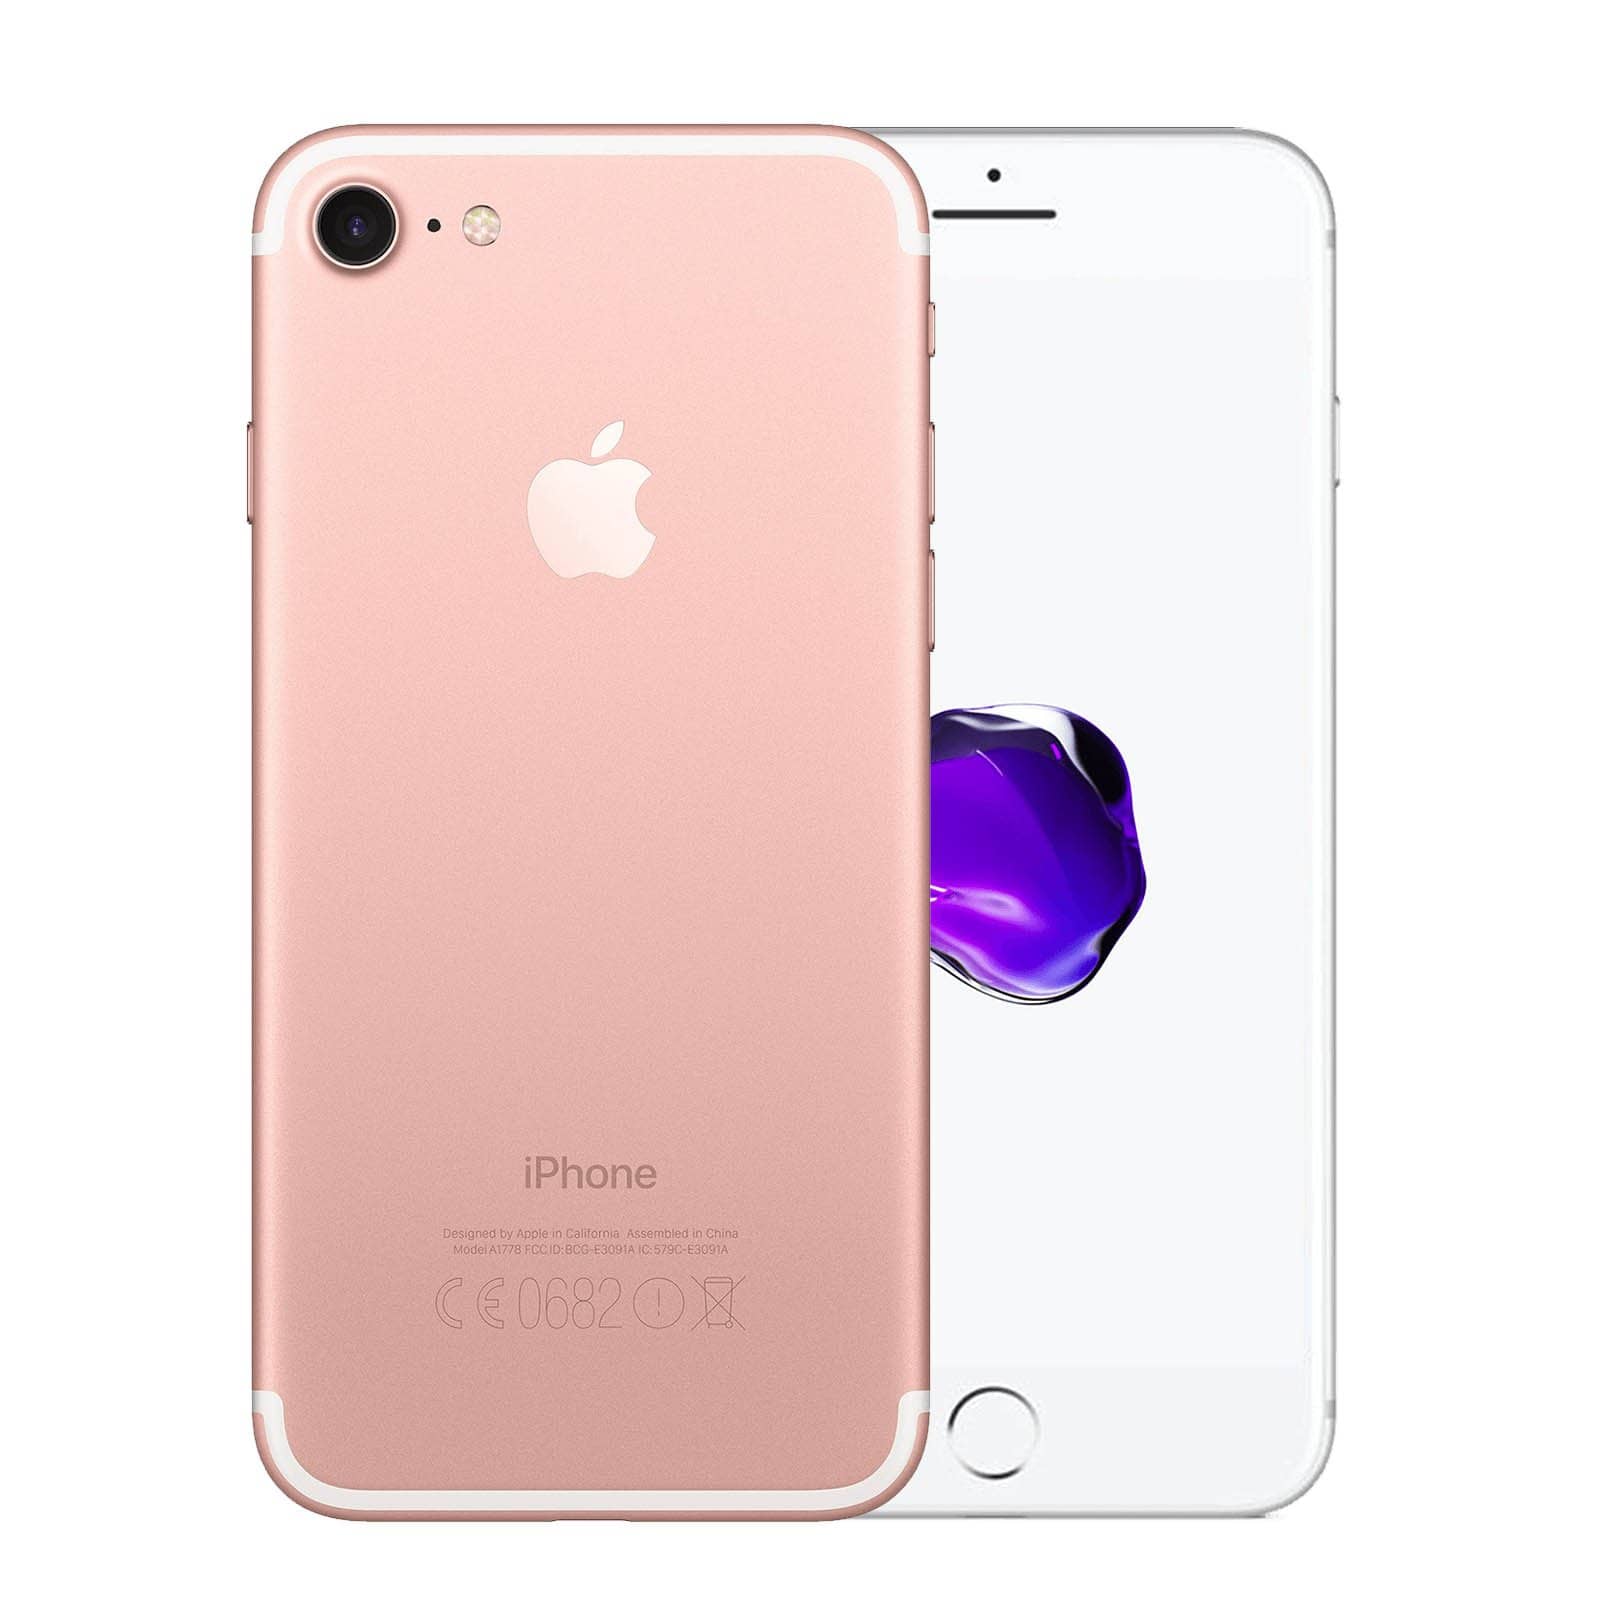 Apple iPhone 7 128GB Rose Gold Very Good - Unlocked 128GB Rose Gold Very Good